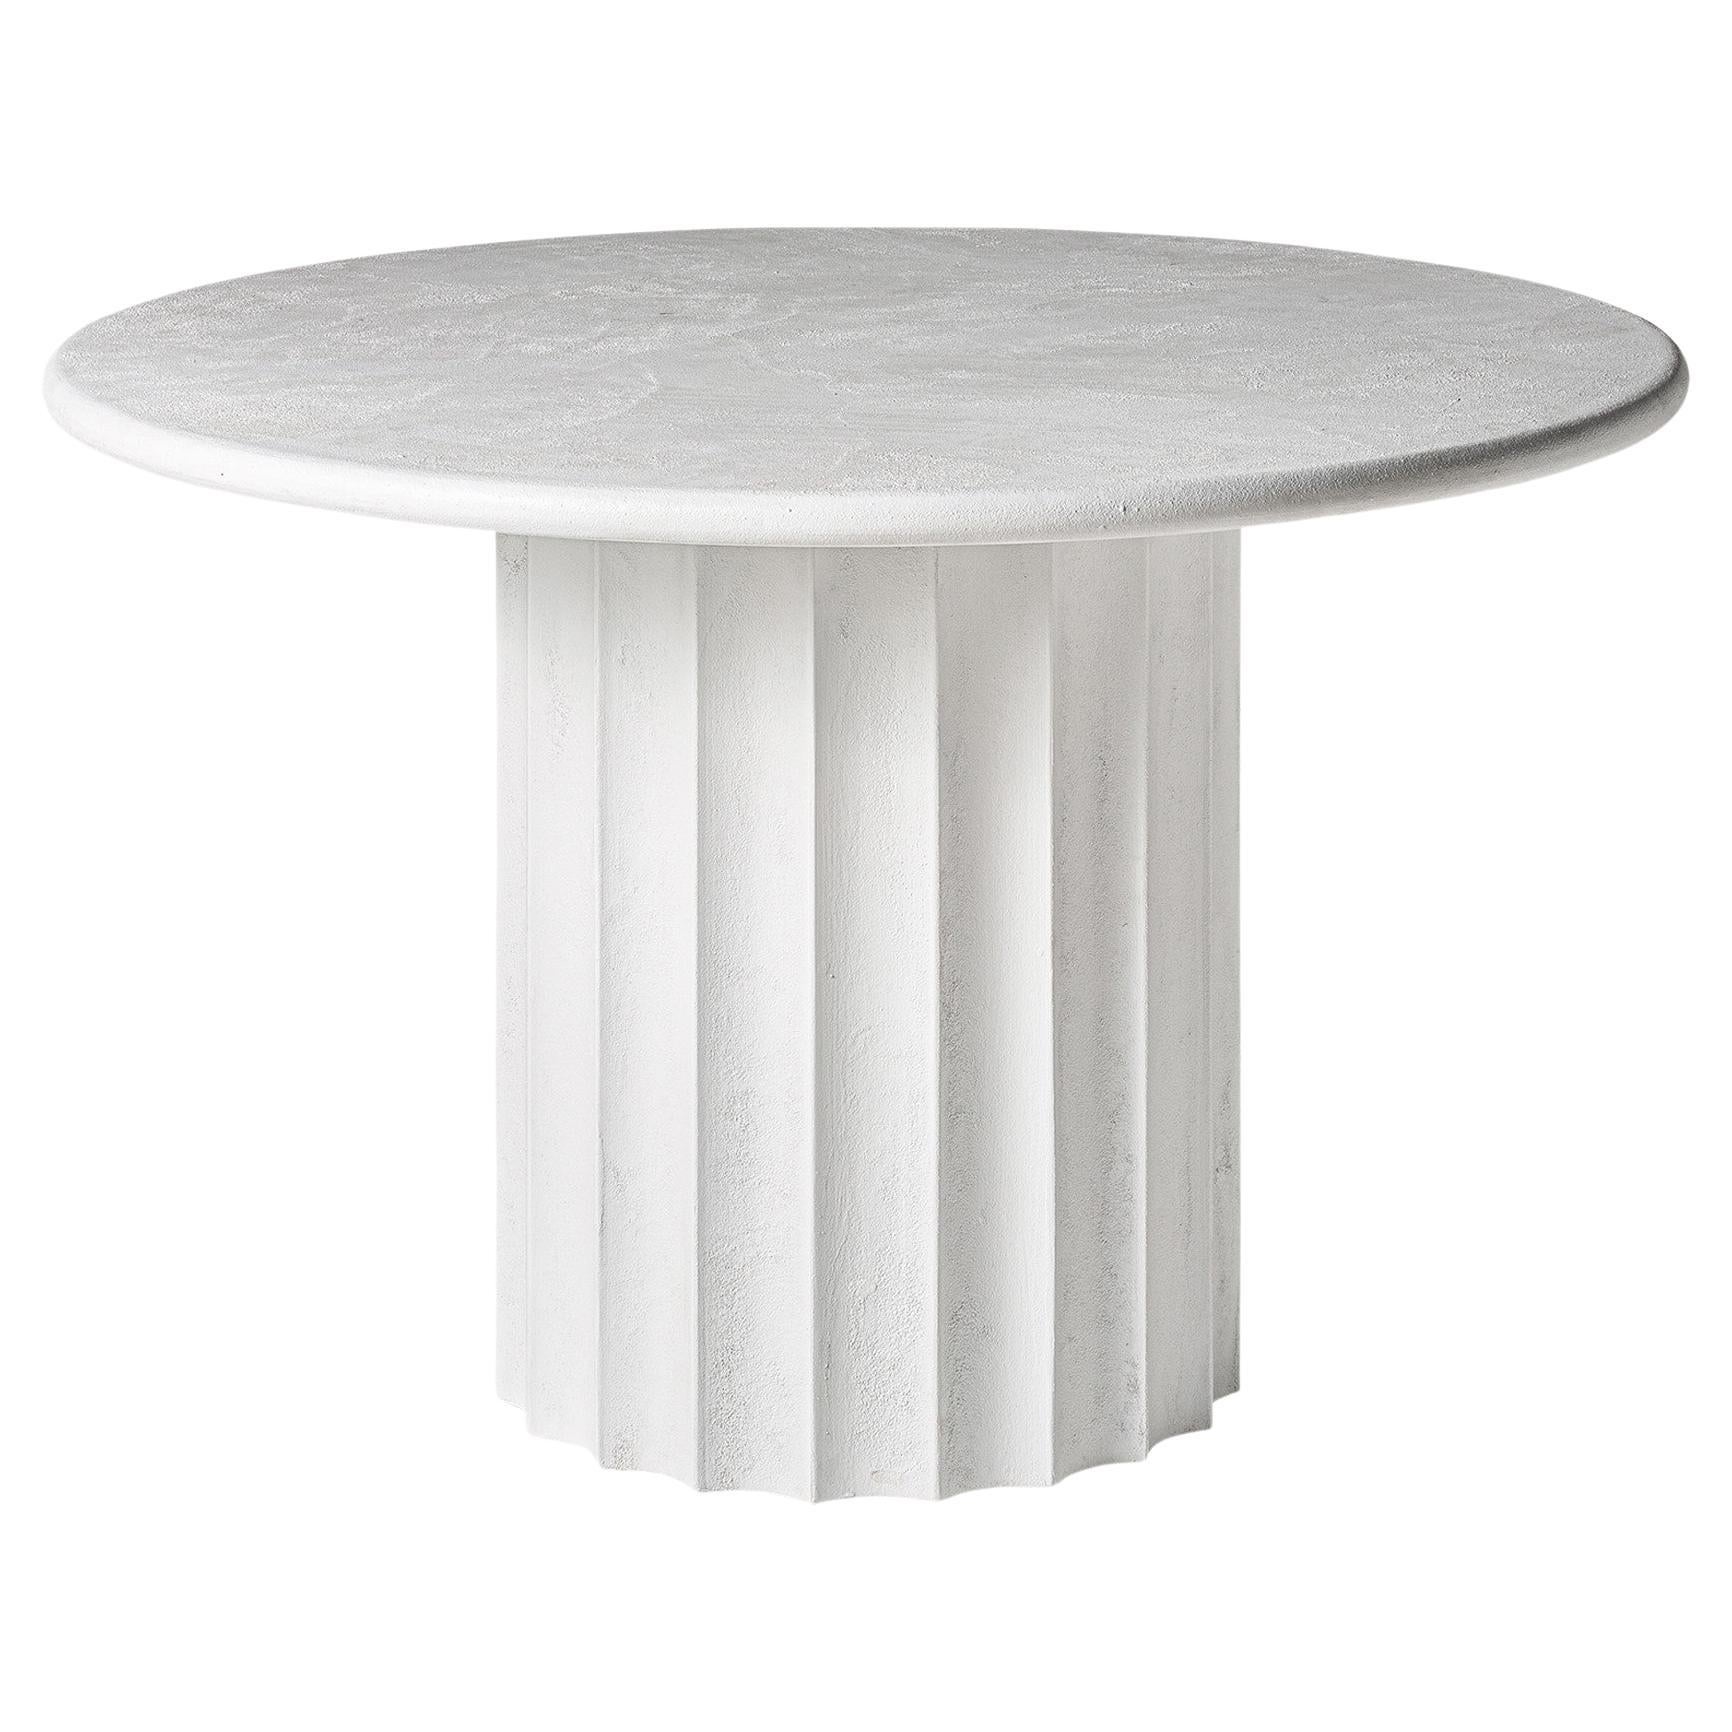 Italian 1970s Design Style White Concrete Pedestal Table